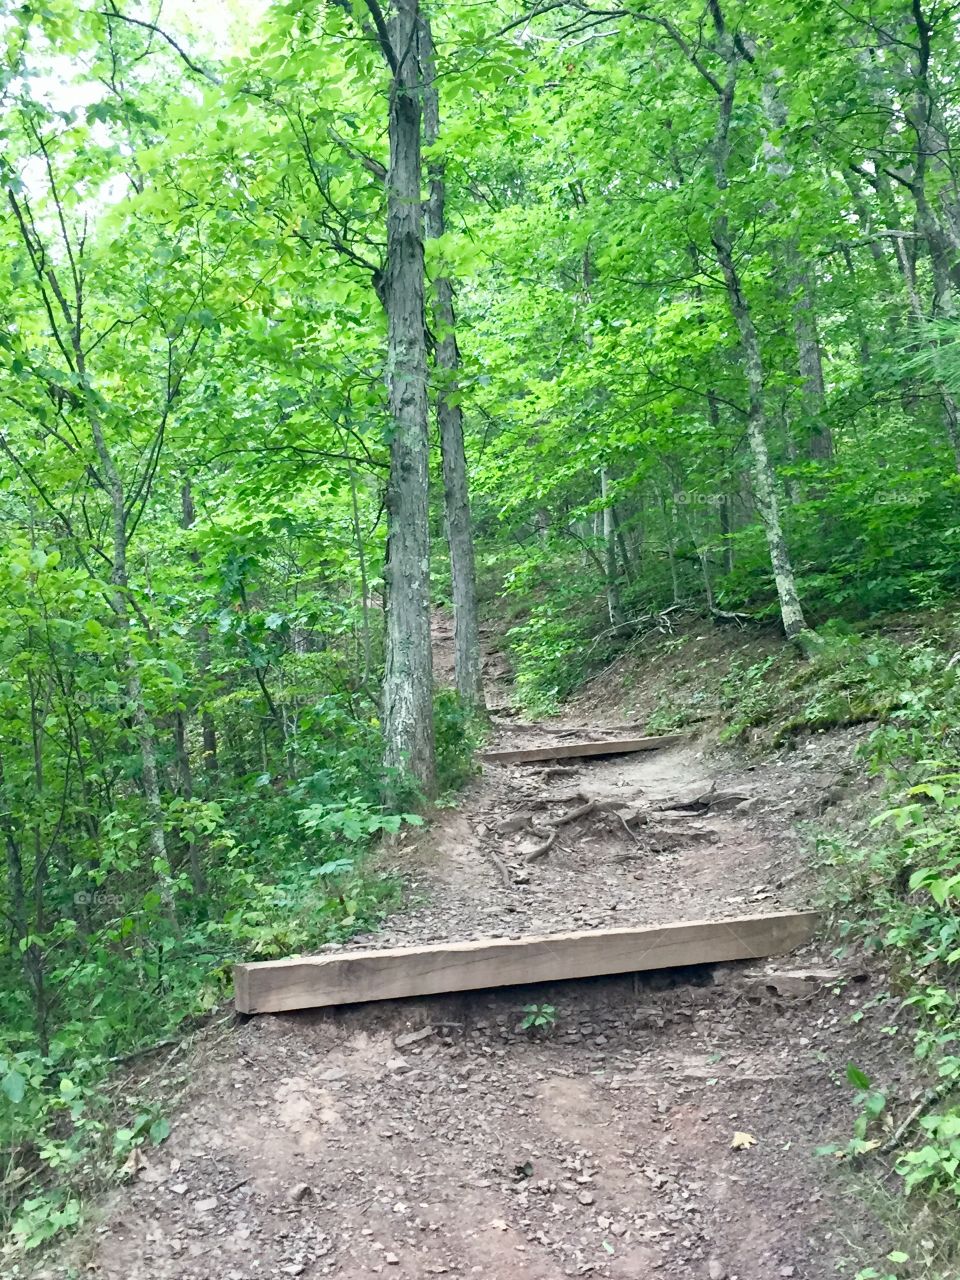 Hiking trail
Pennsylvania 